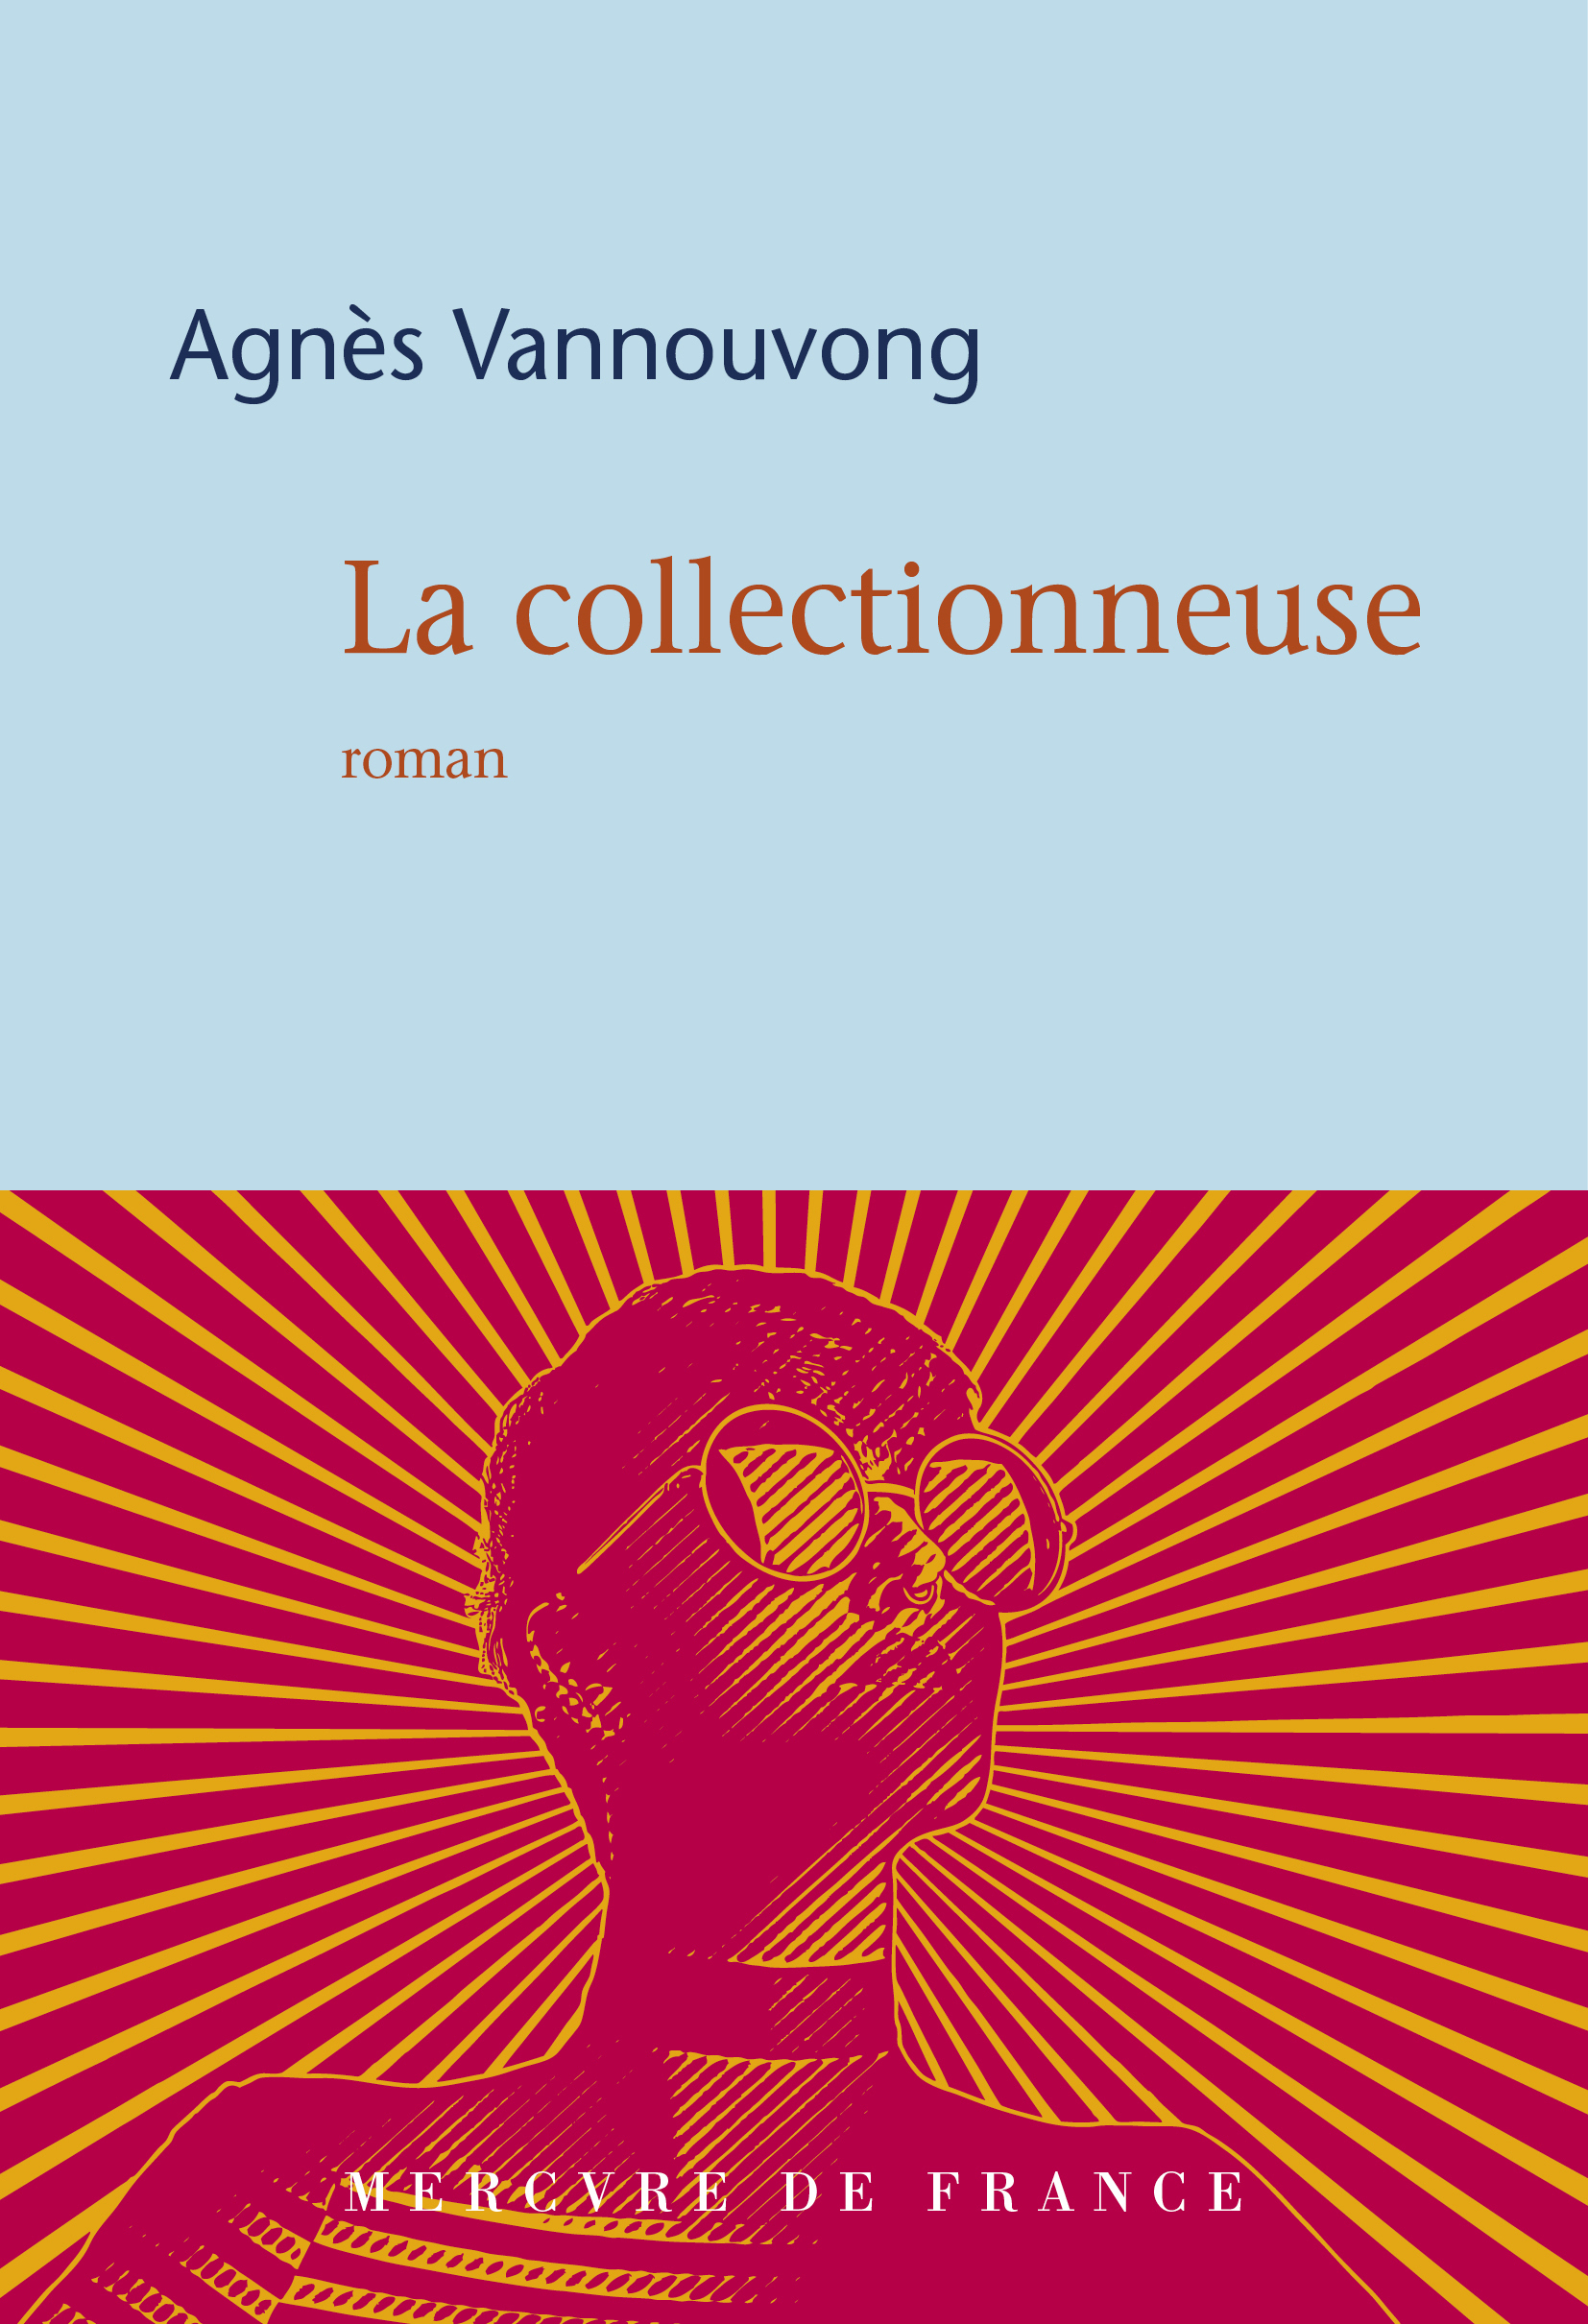 La collectionneuse (9782715253476-front-cover)